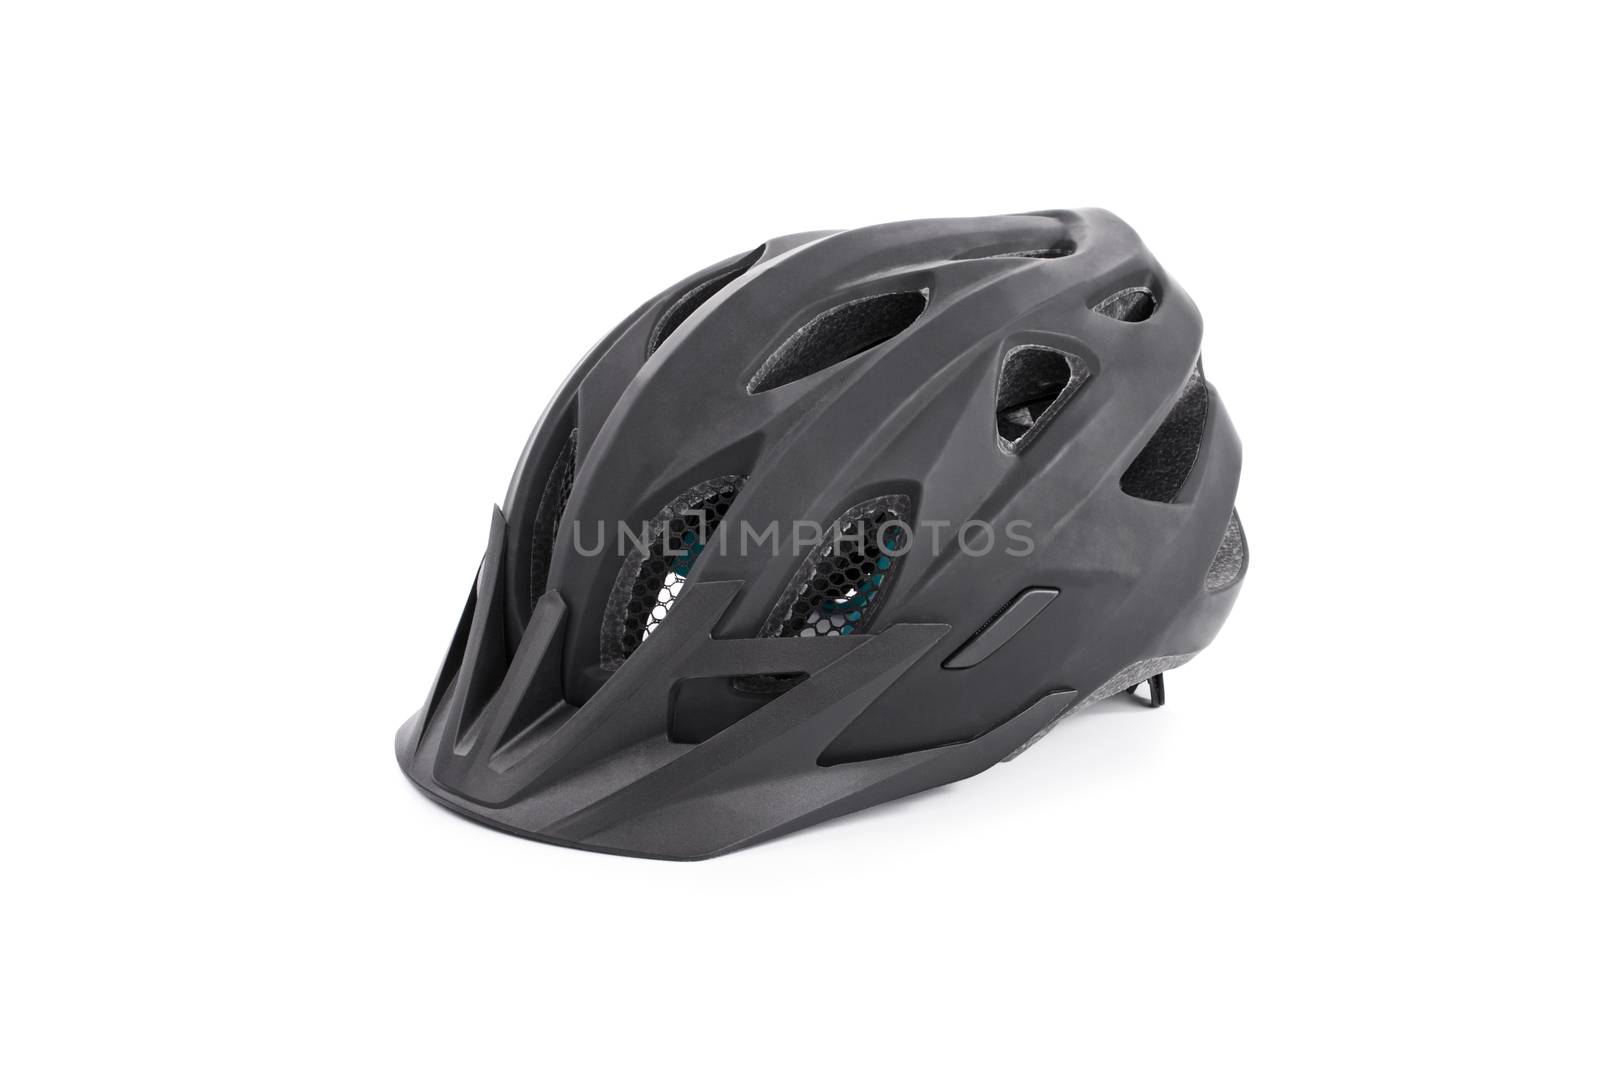 Black bicycle helmet, isolated on white background.